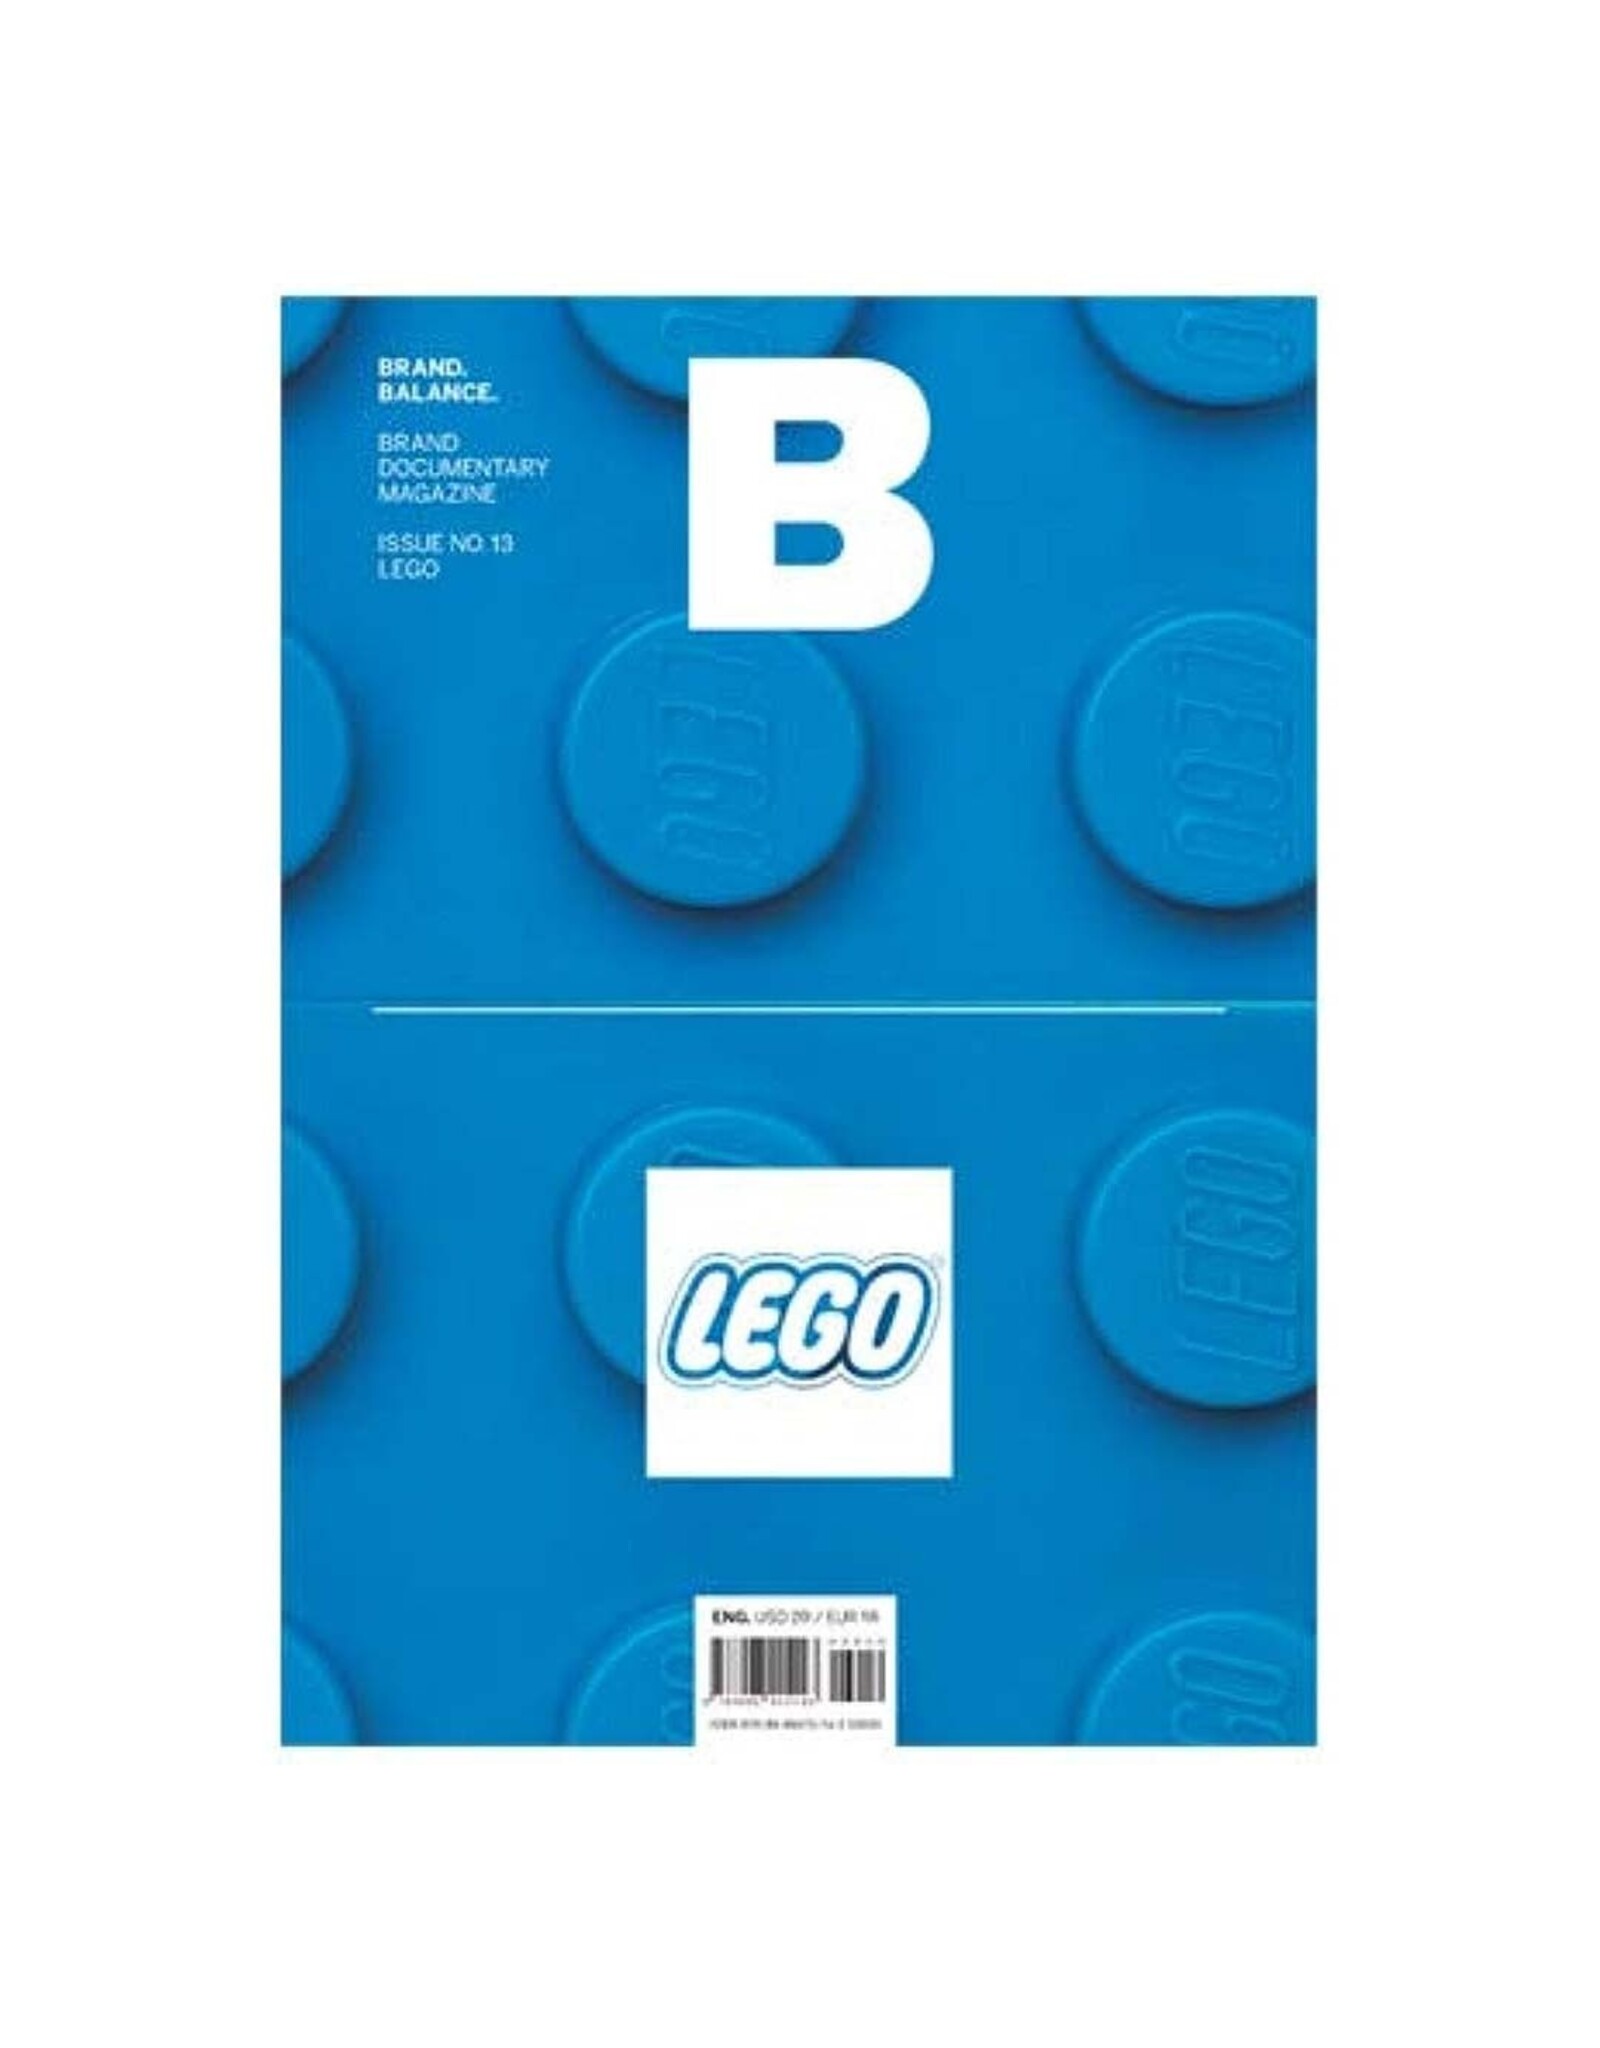 B Magazine Issue No. 13 - Lego